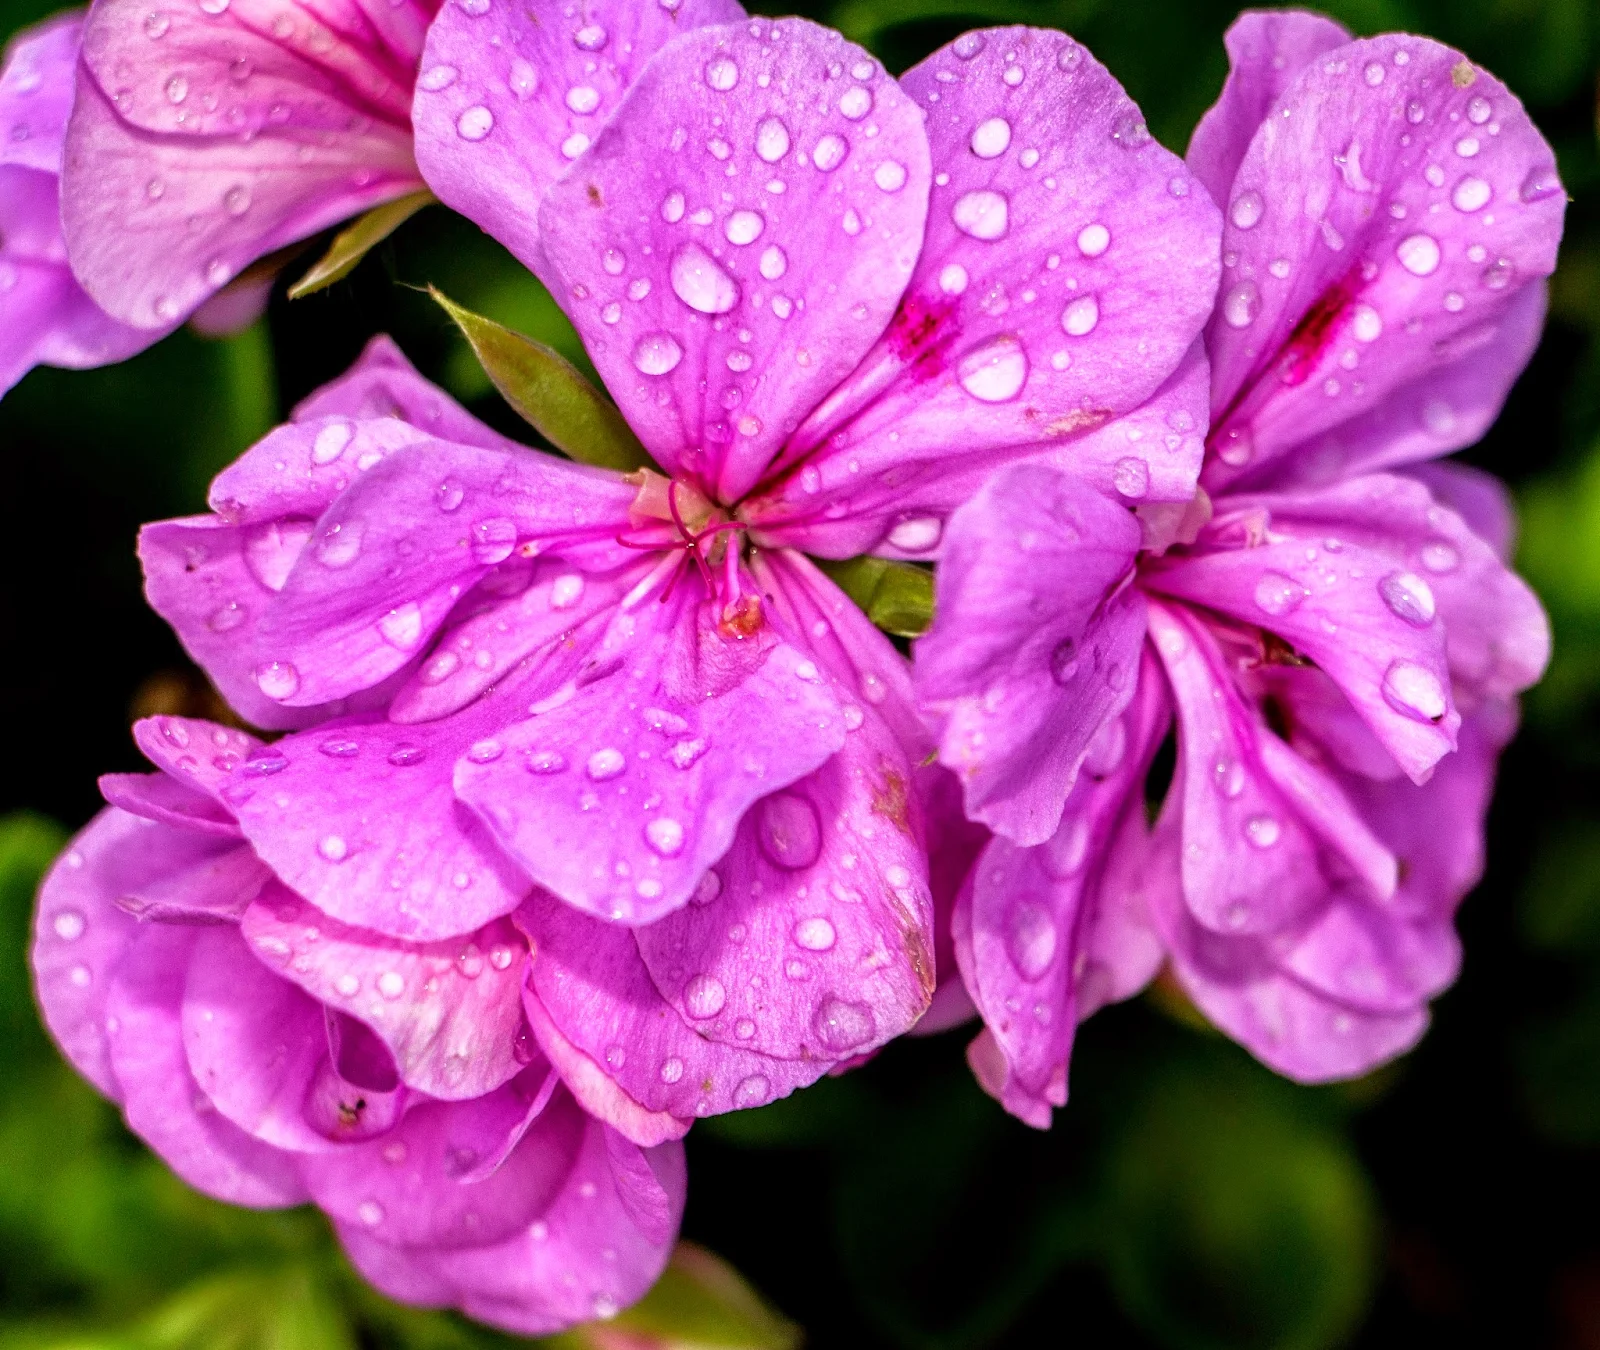 Flowers In The Rain Durbanville, Cape Town - Canon EOS 700D / EF-S 18-135mm IS STM Lens